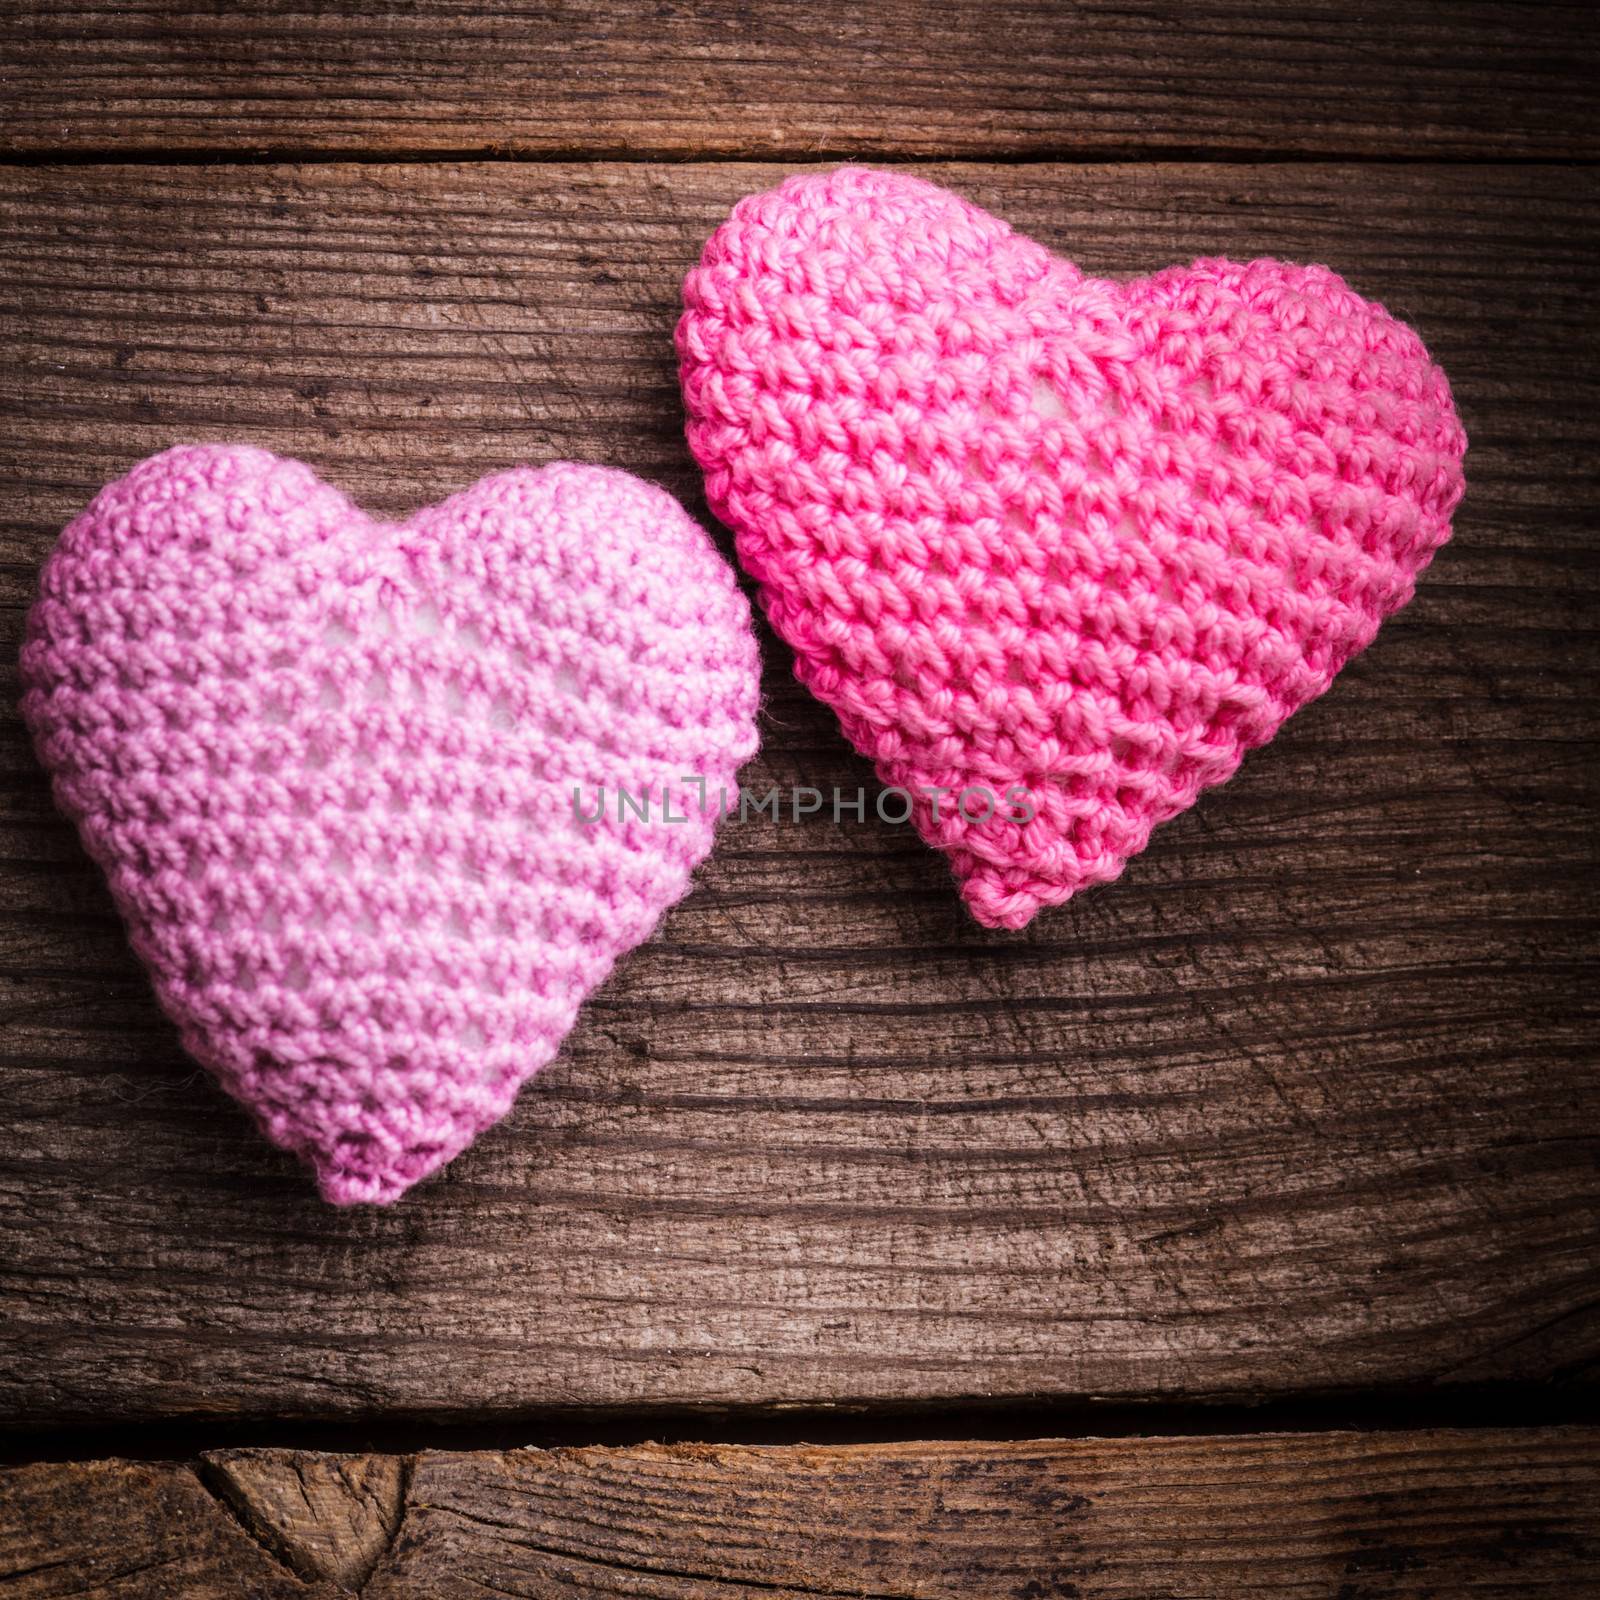 Crochet valentine hearts. Valentine's day greeting card. Love concept